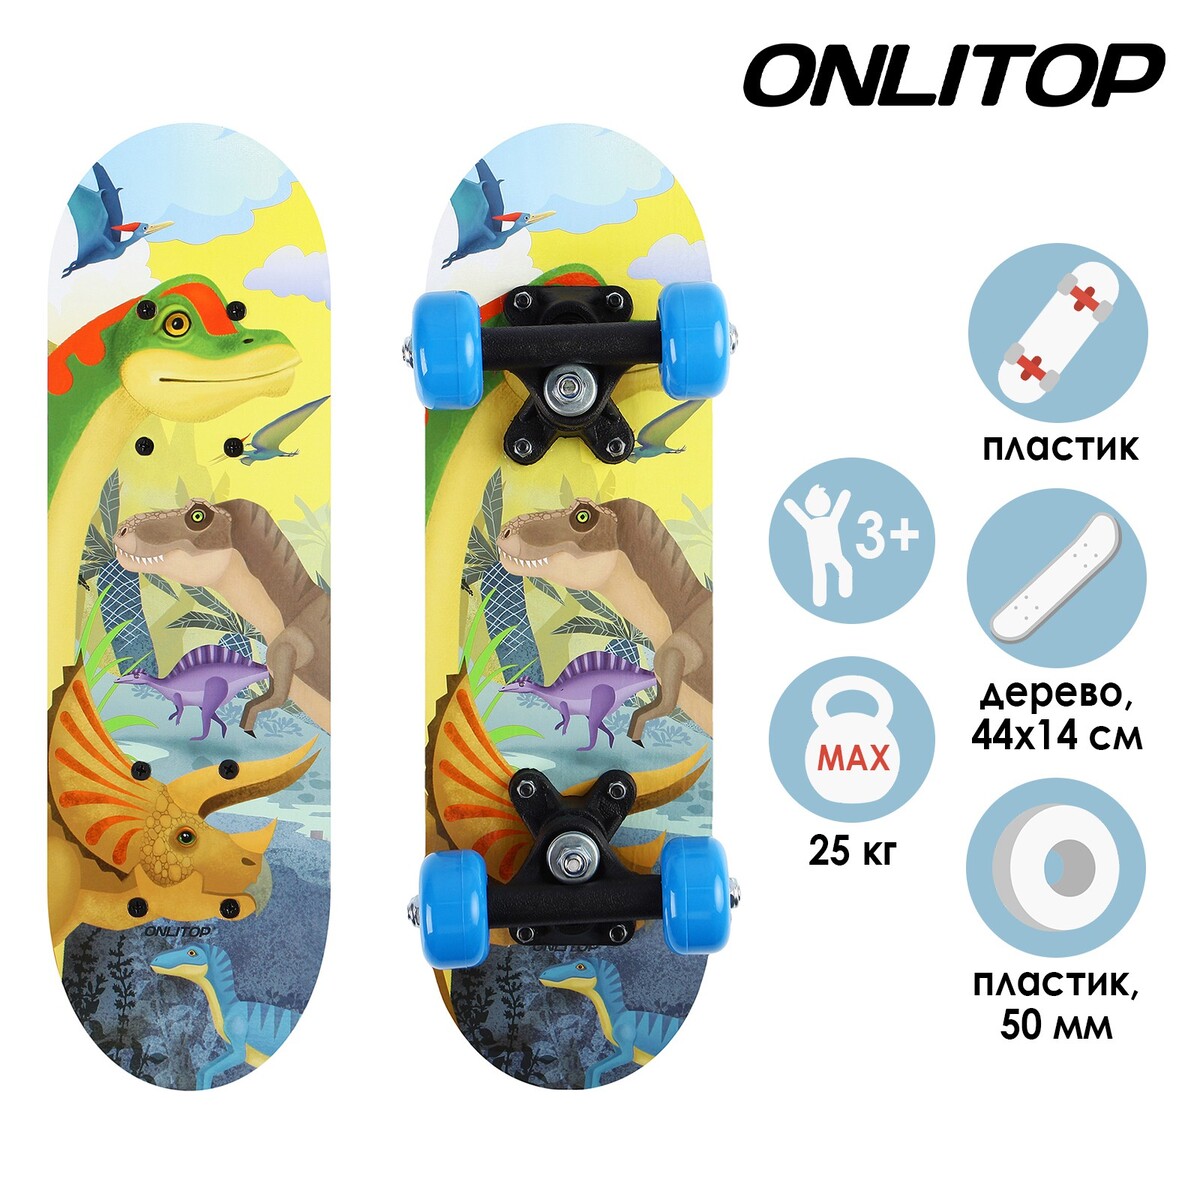 Скейтборд детский onlitop, 44х14 см, колеса pvc 50 мм, пластиковая рама